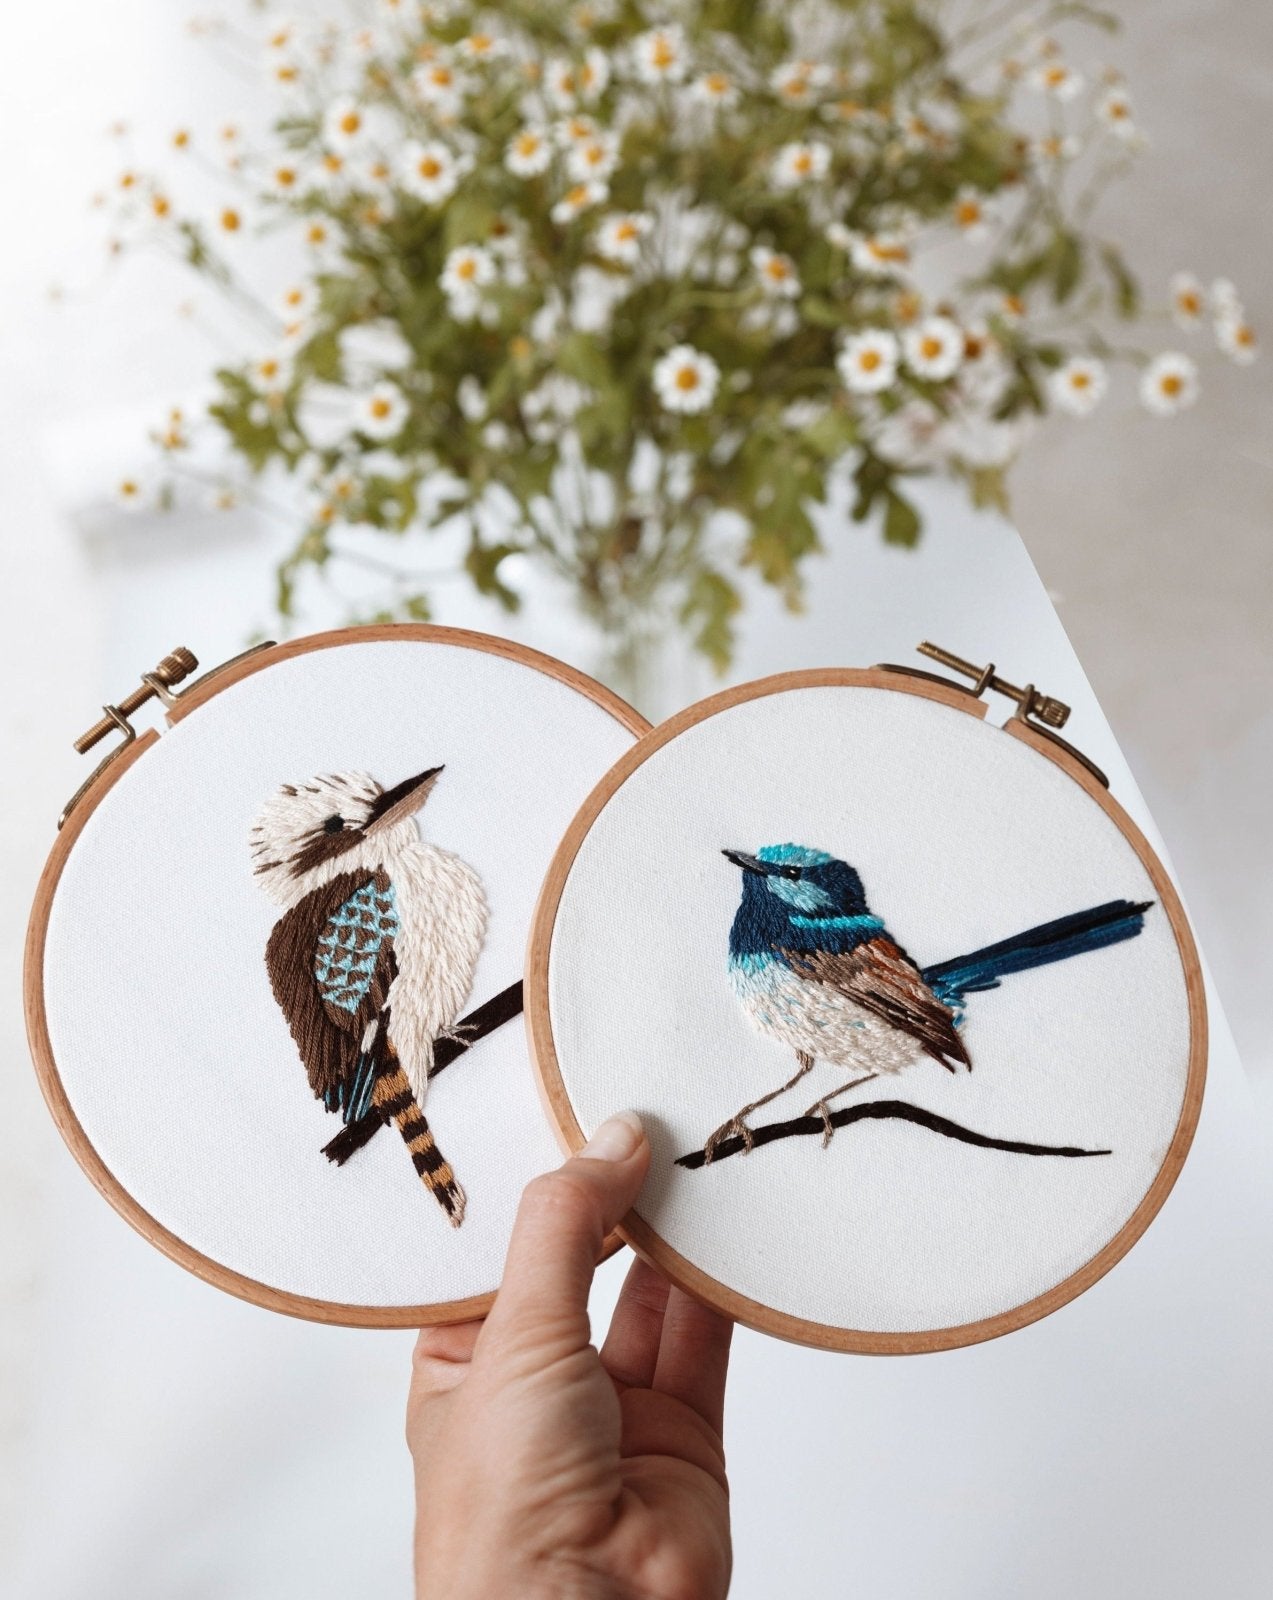 Kookaburra Embroidery Kit - Stitched Up Kits